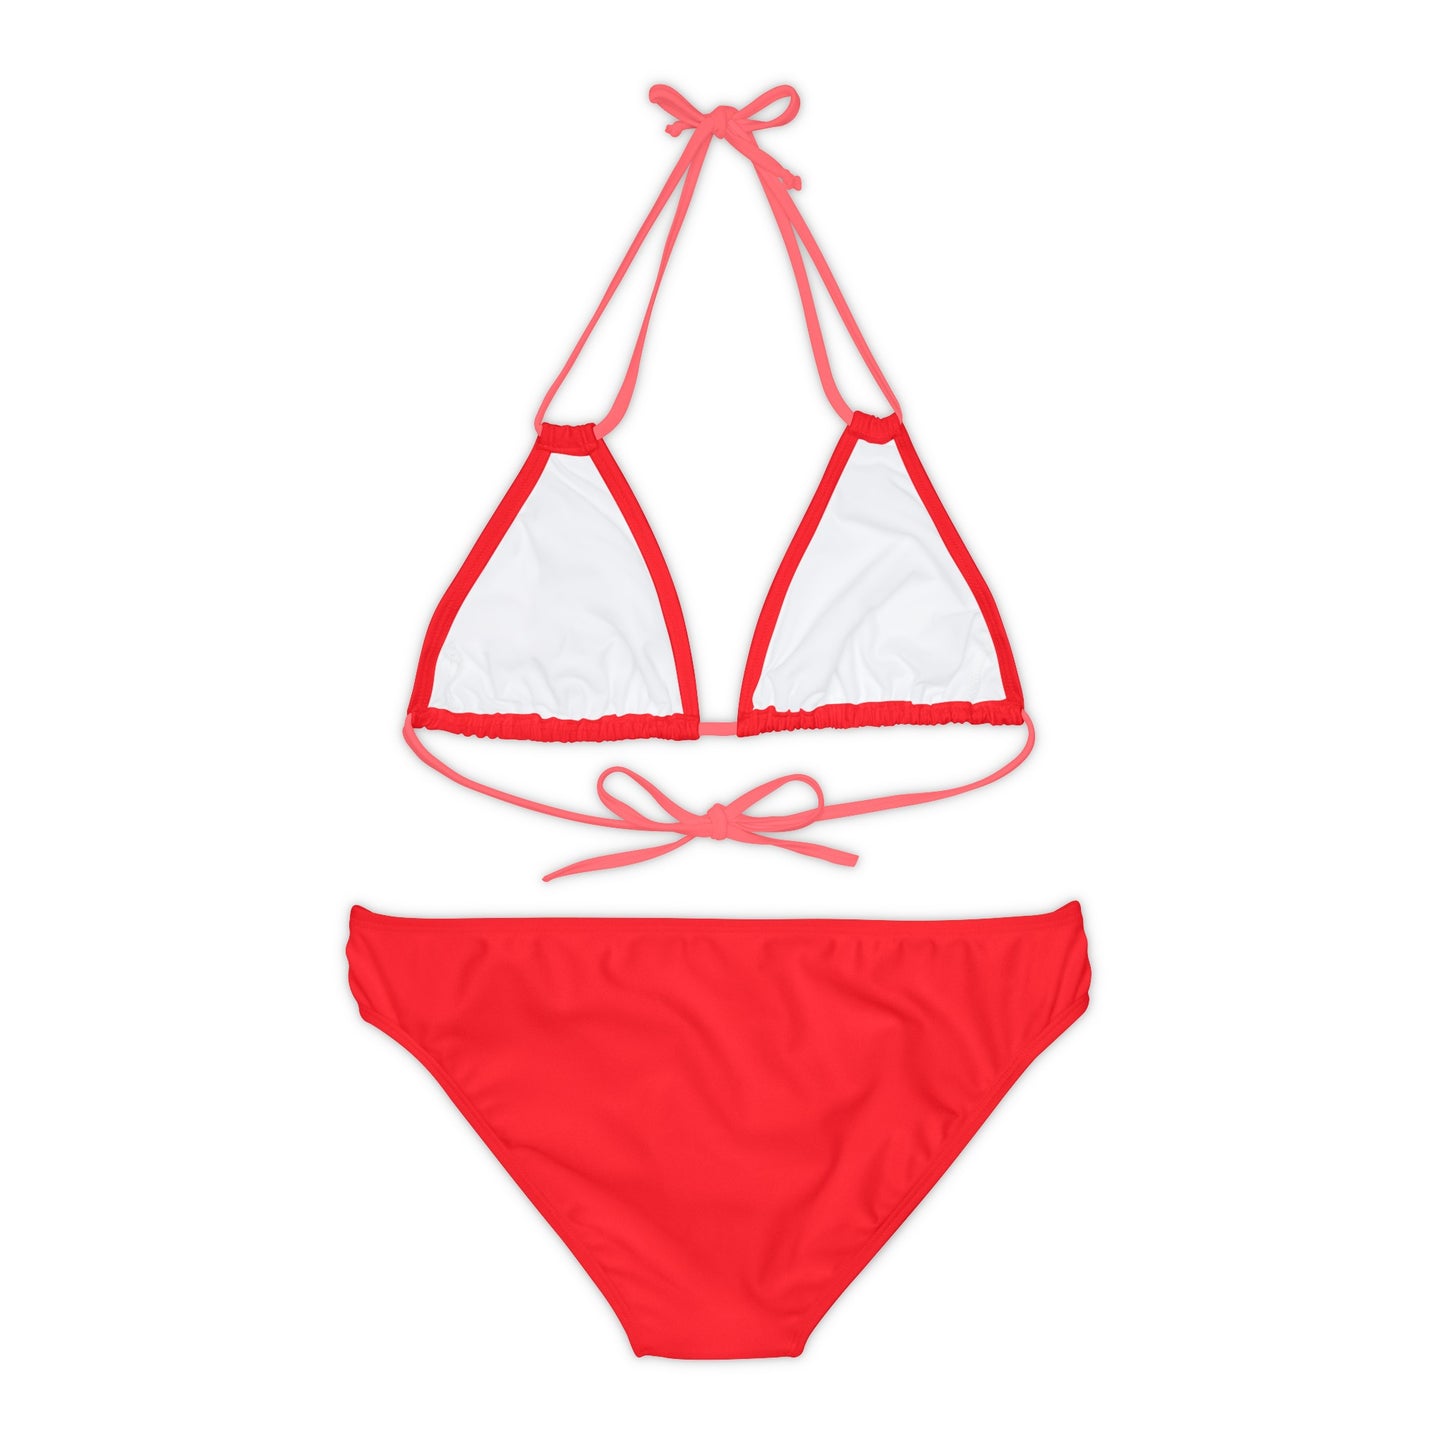 Strappy Bikini Set Plain Red_00